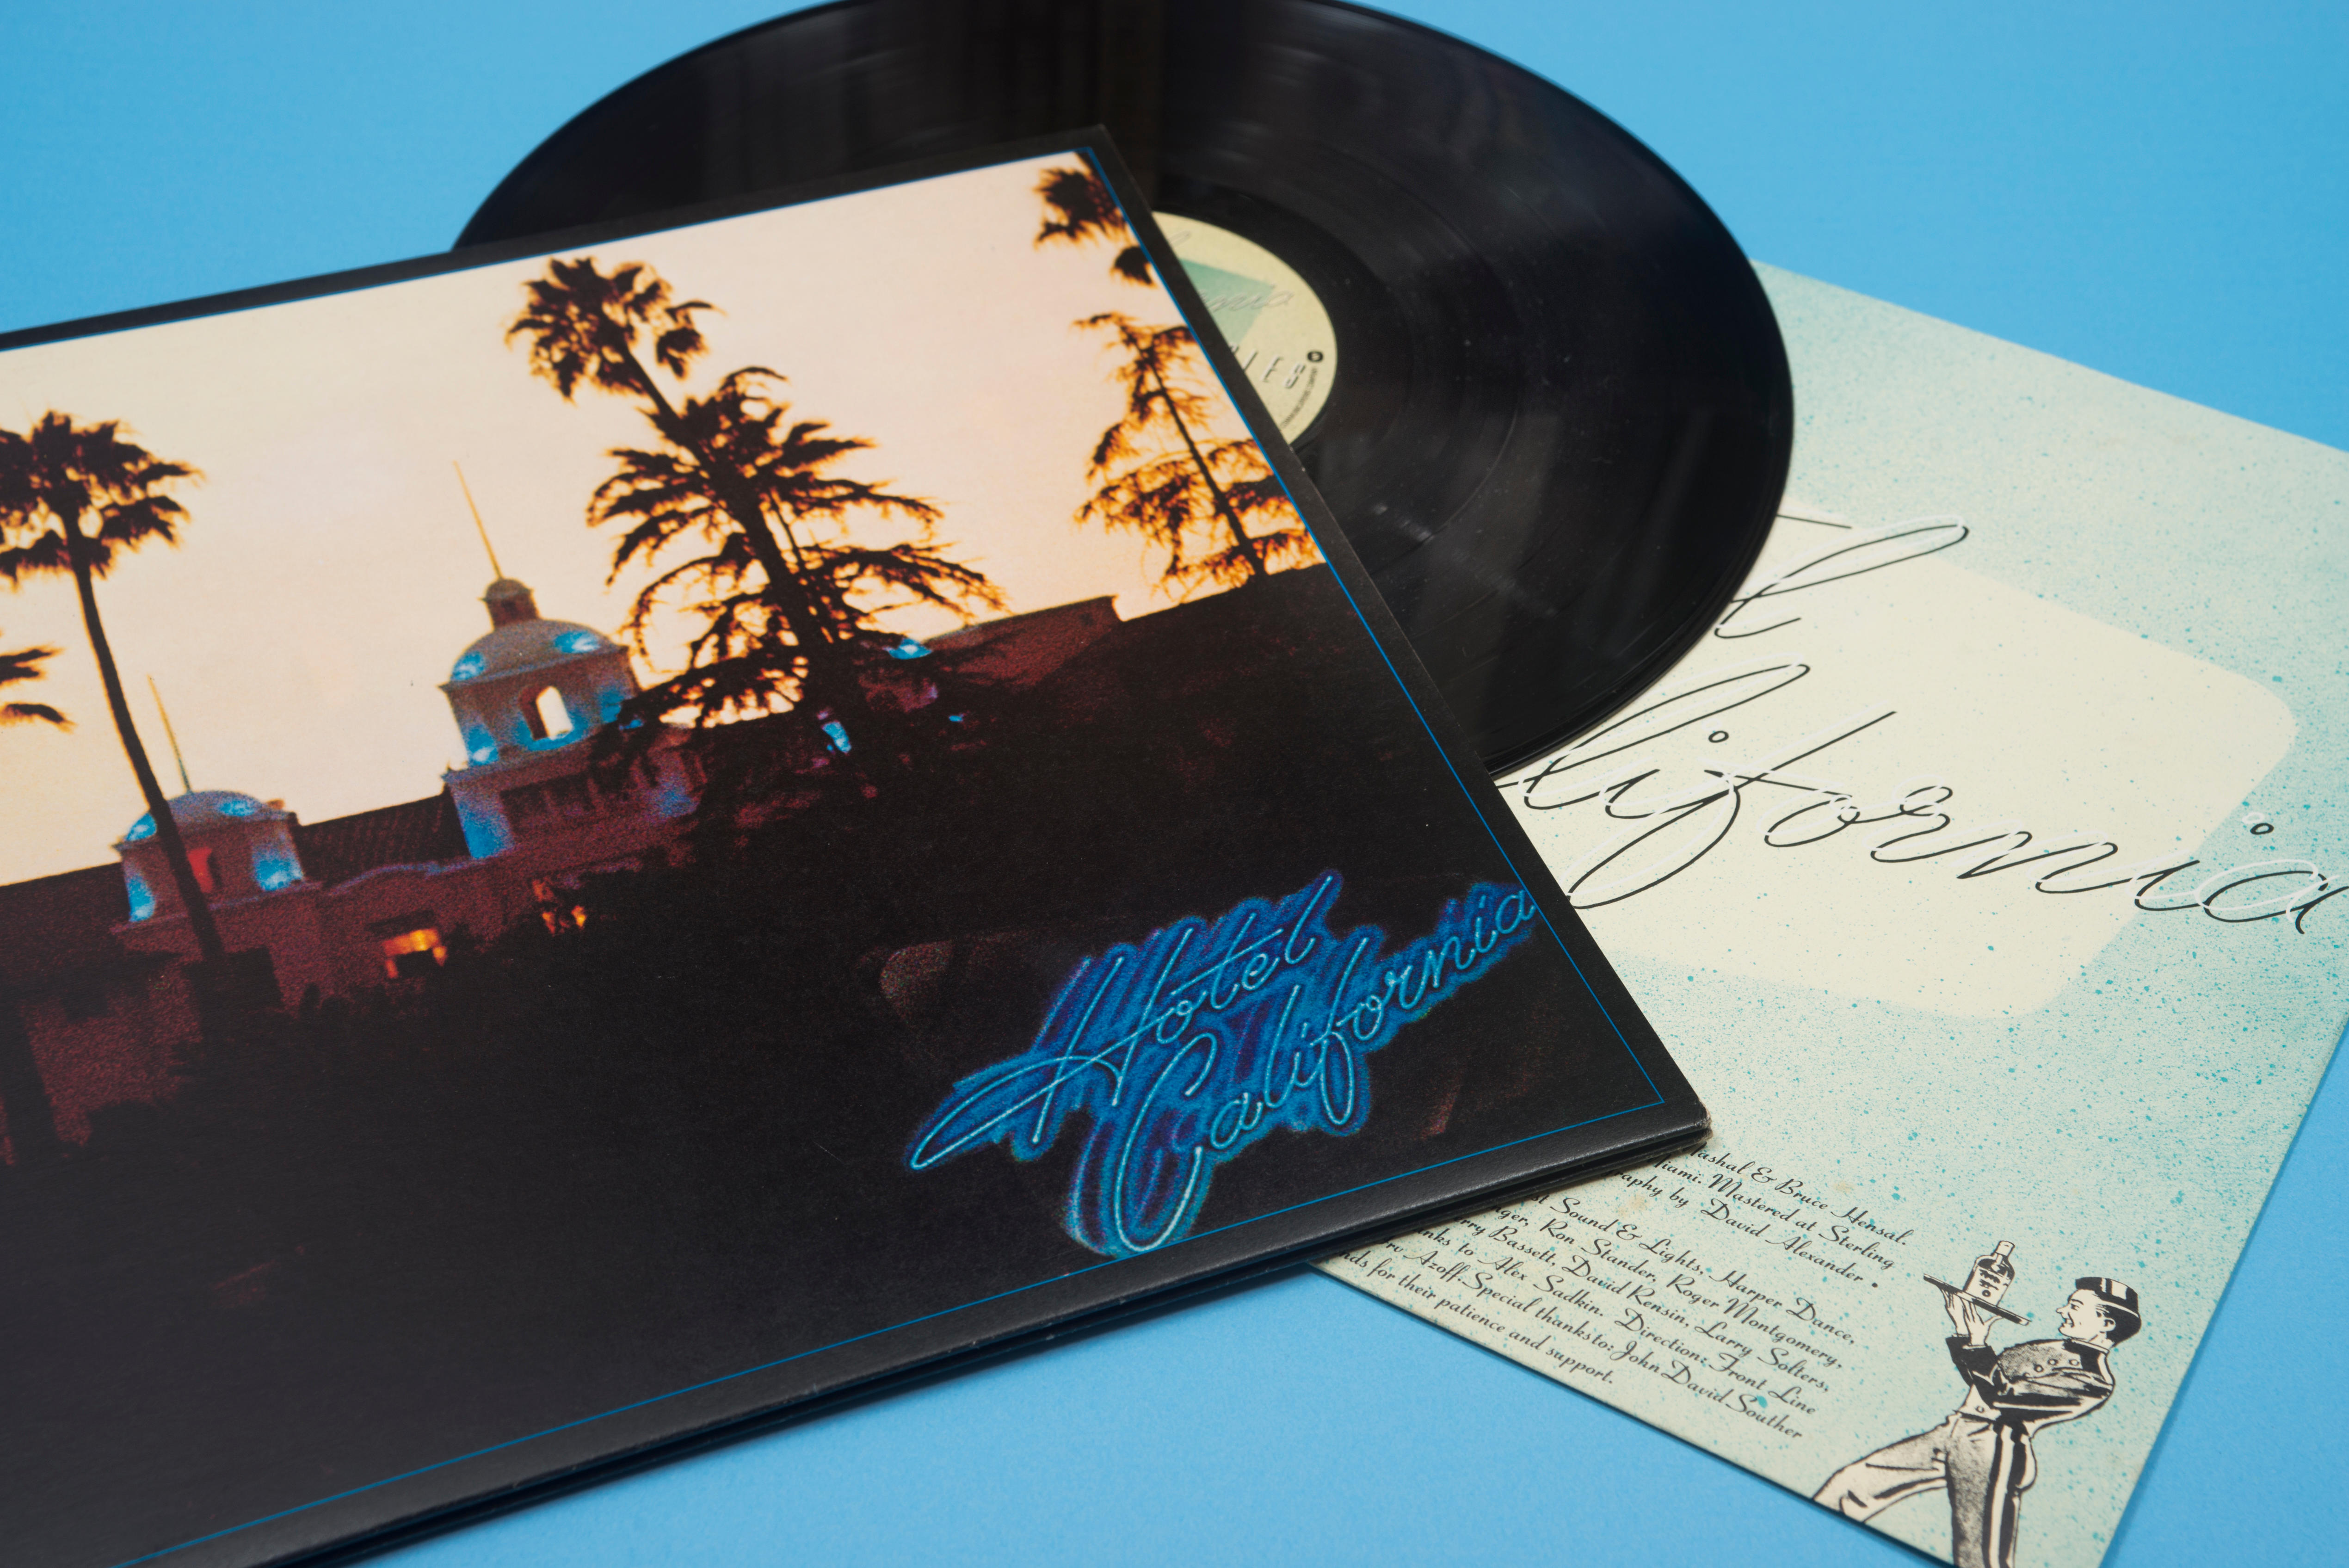 Hotel California album on vinyl by The Eagles with original sleeve artwork